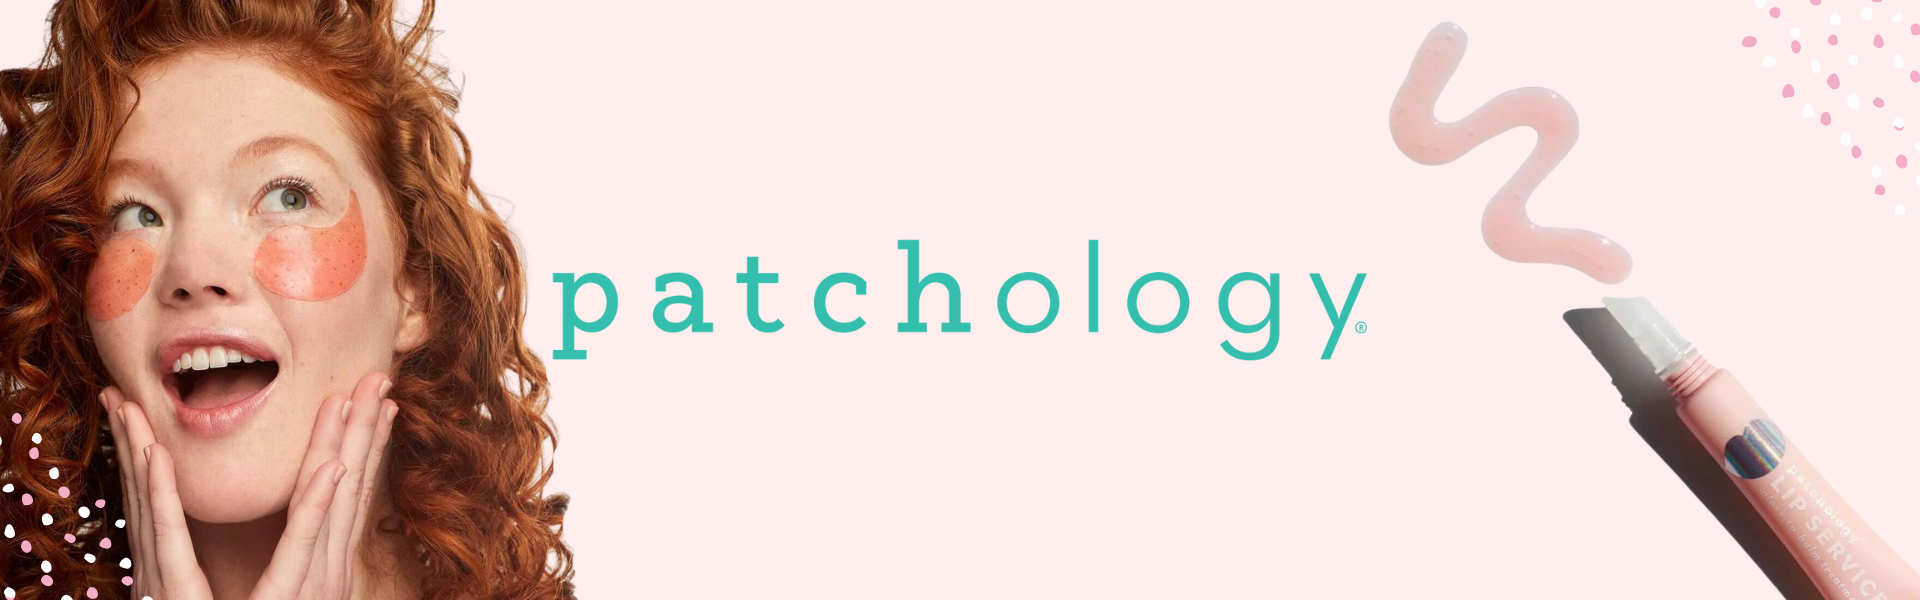 Patchology skin care